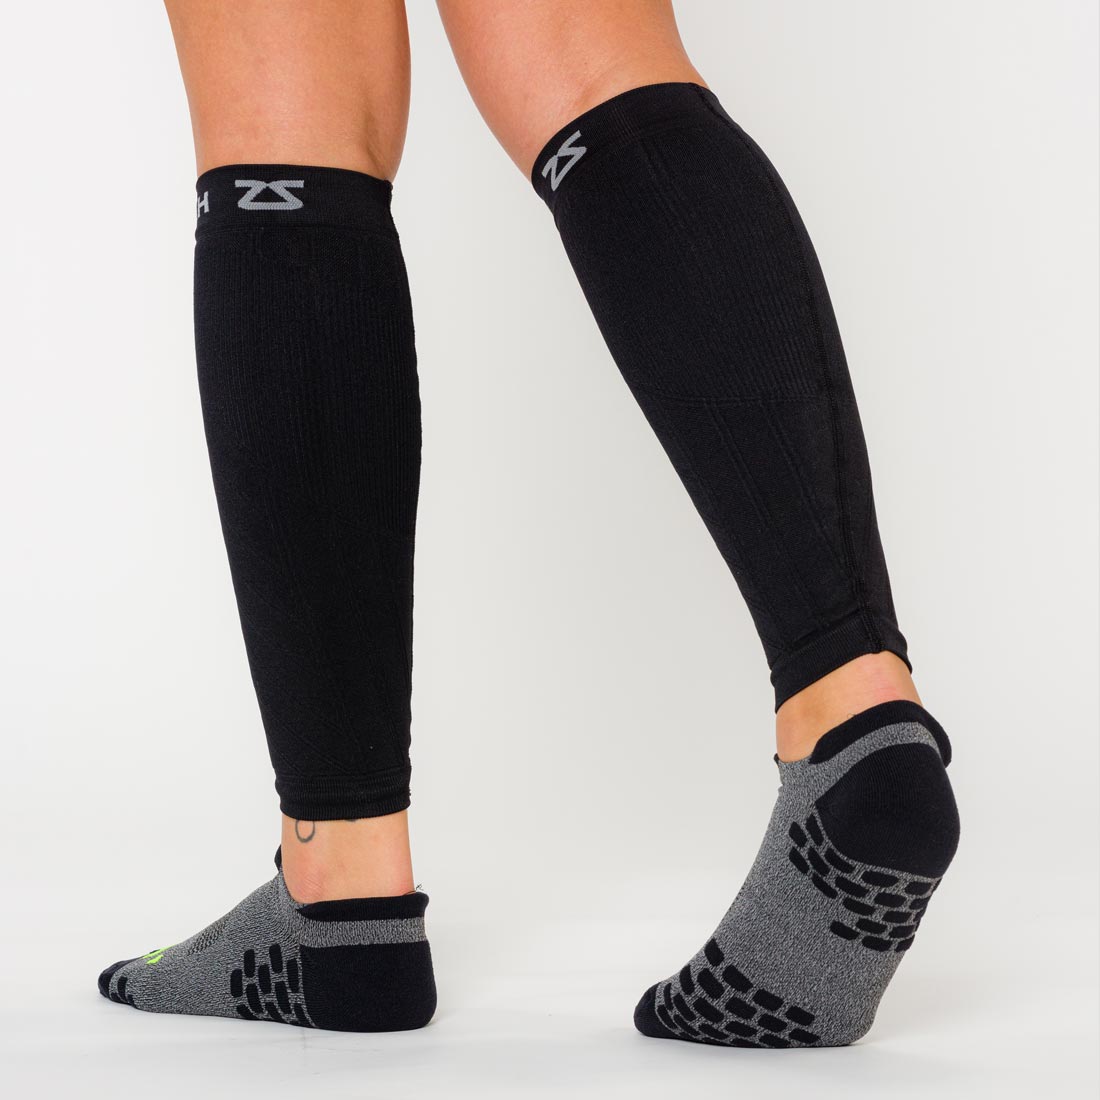 Zensah Compression Leg Sleeves - Black - Correct Toes®